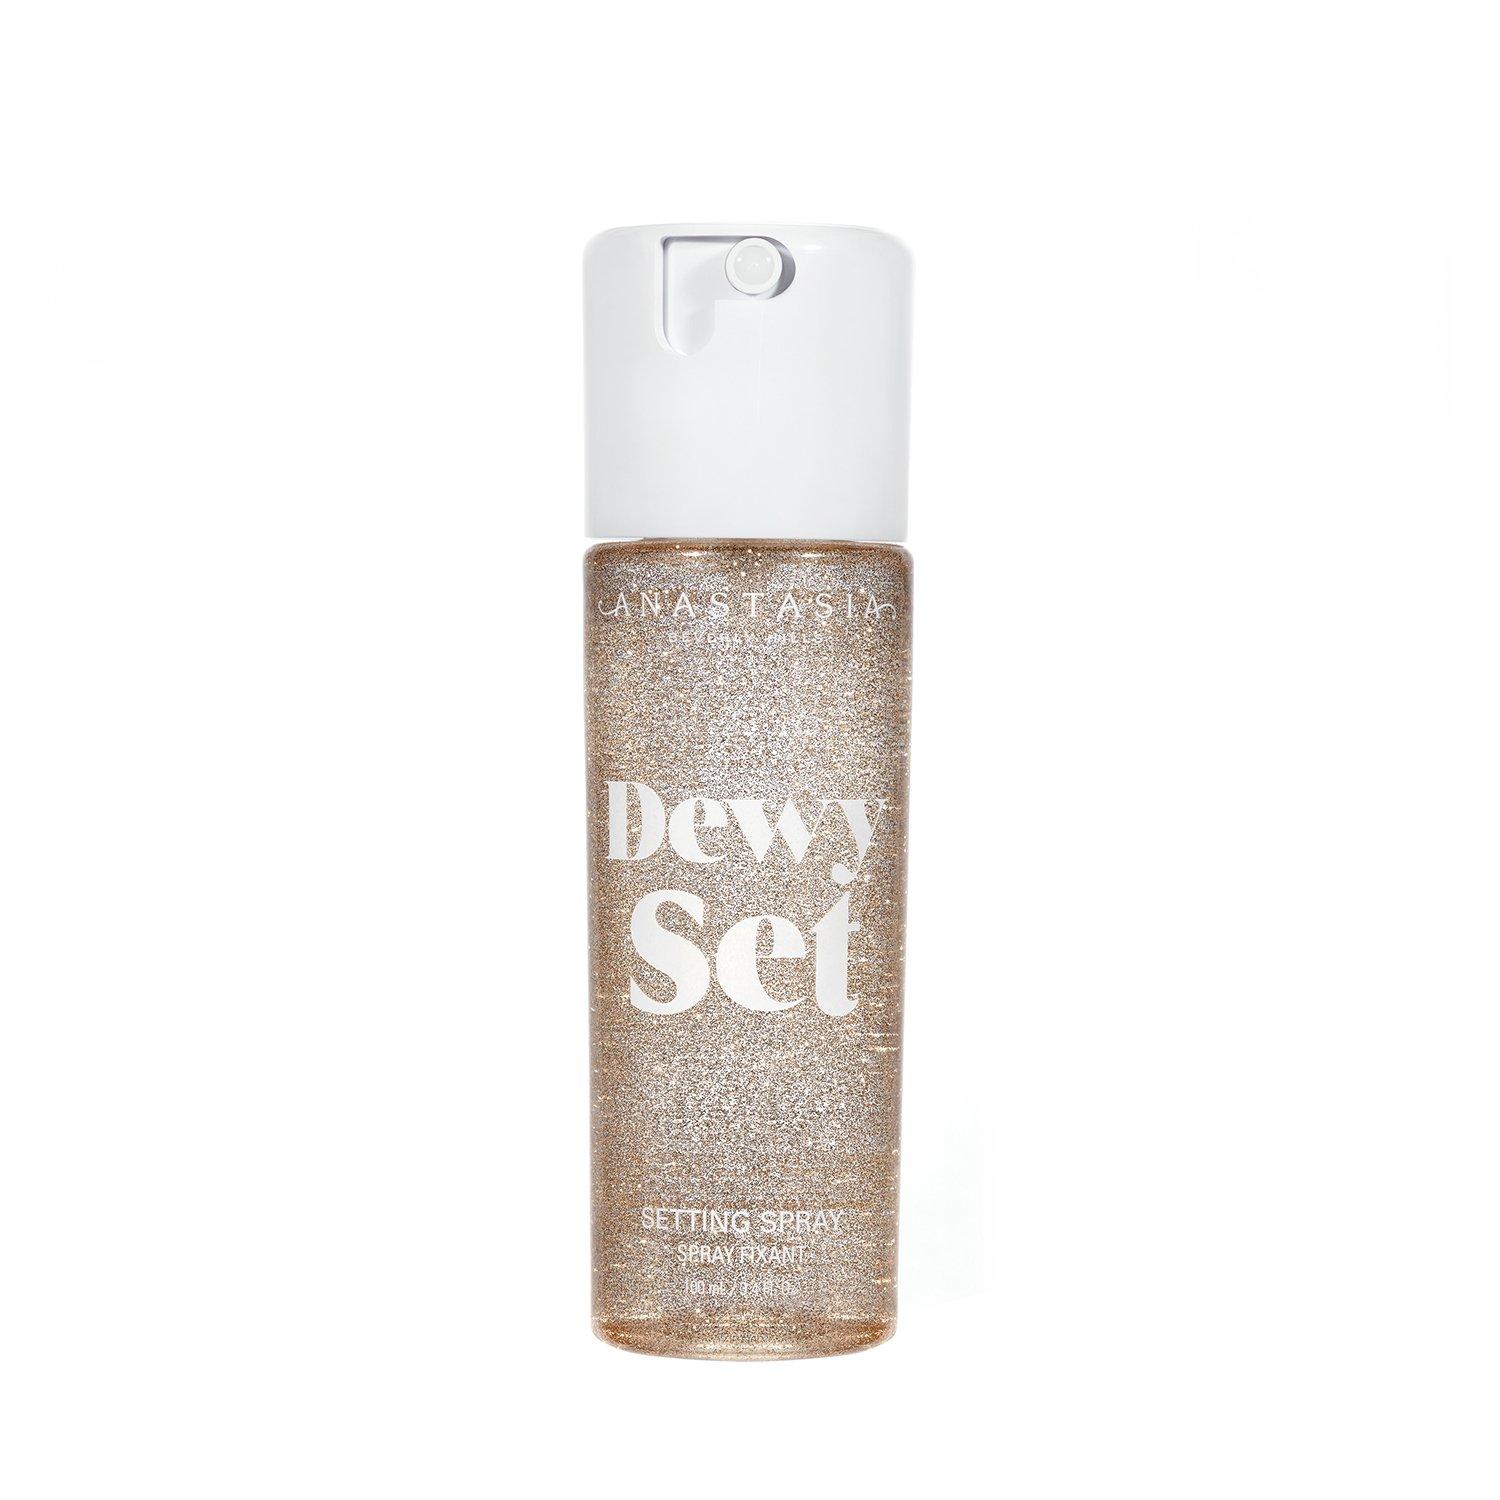 Image of Anastasia Beverly Hills Dewy Set Setting Spray - 100 ml